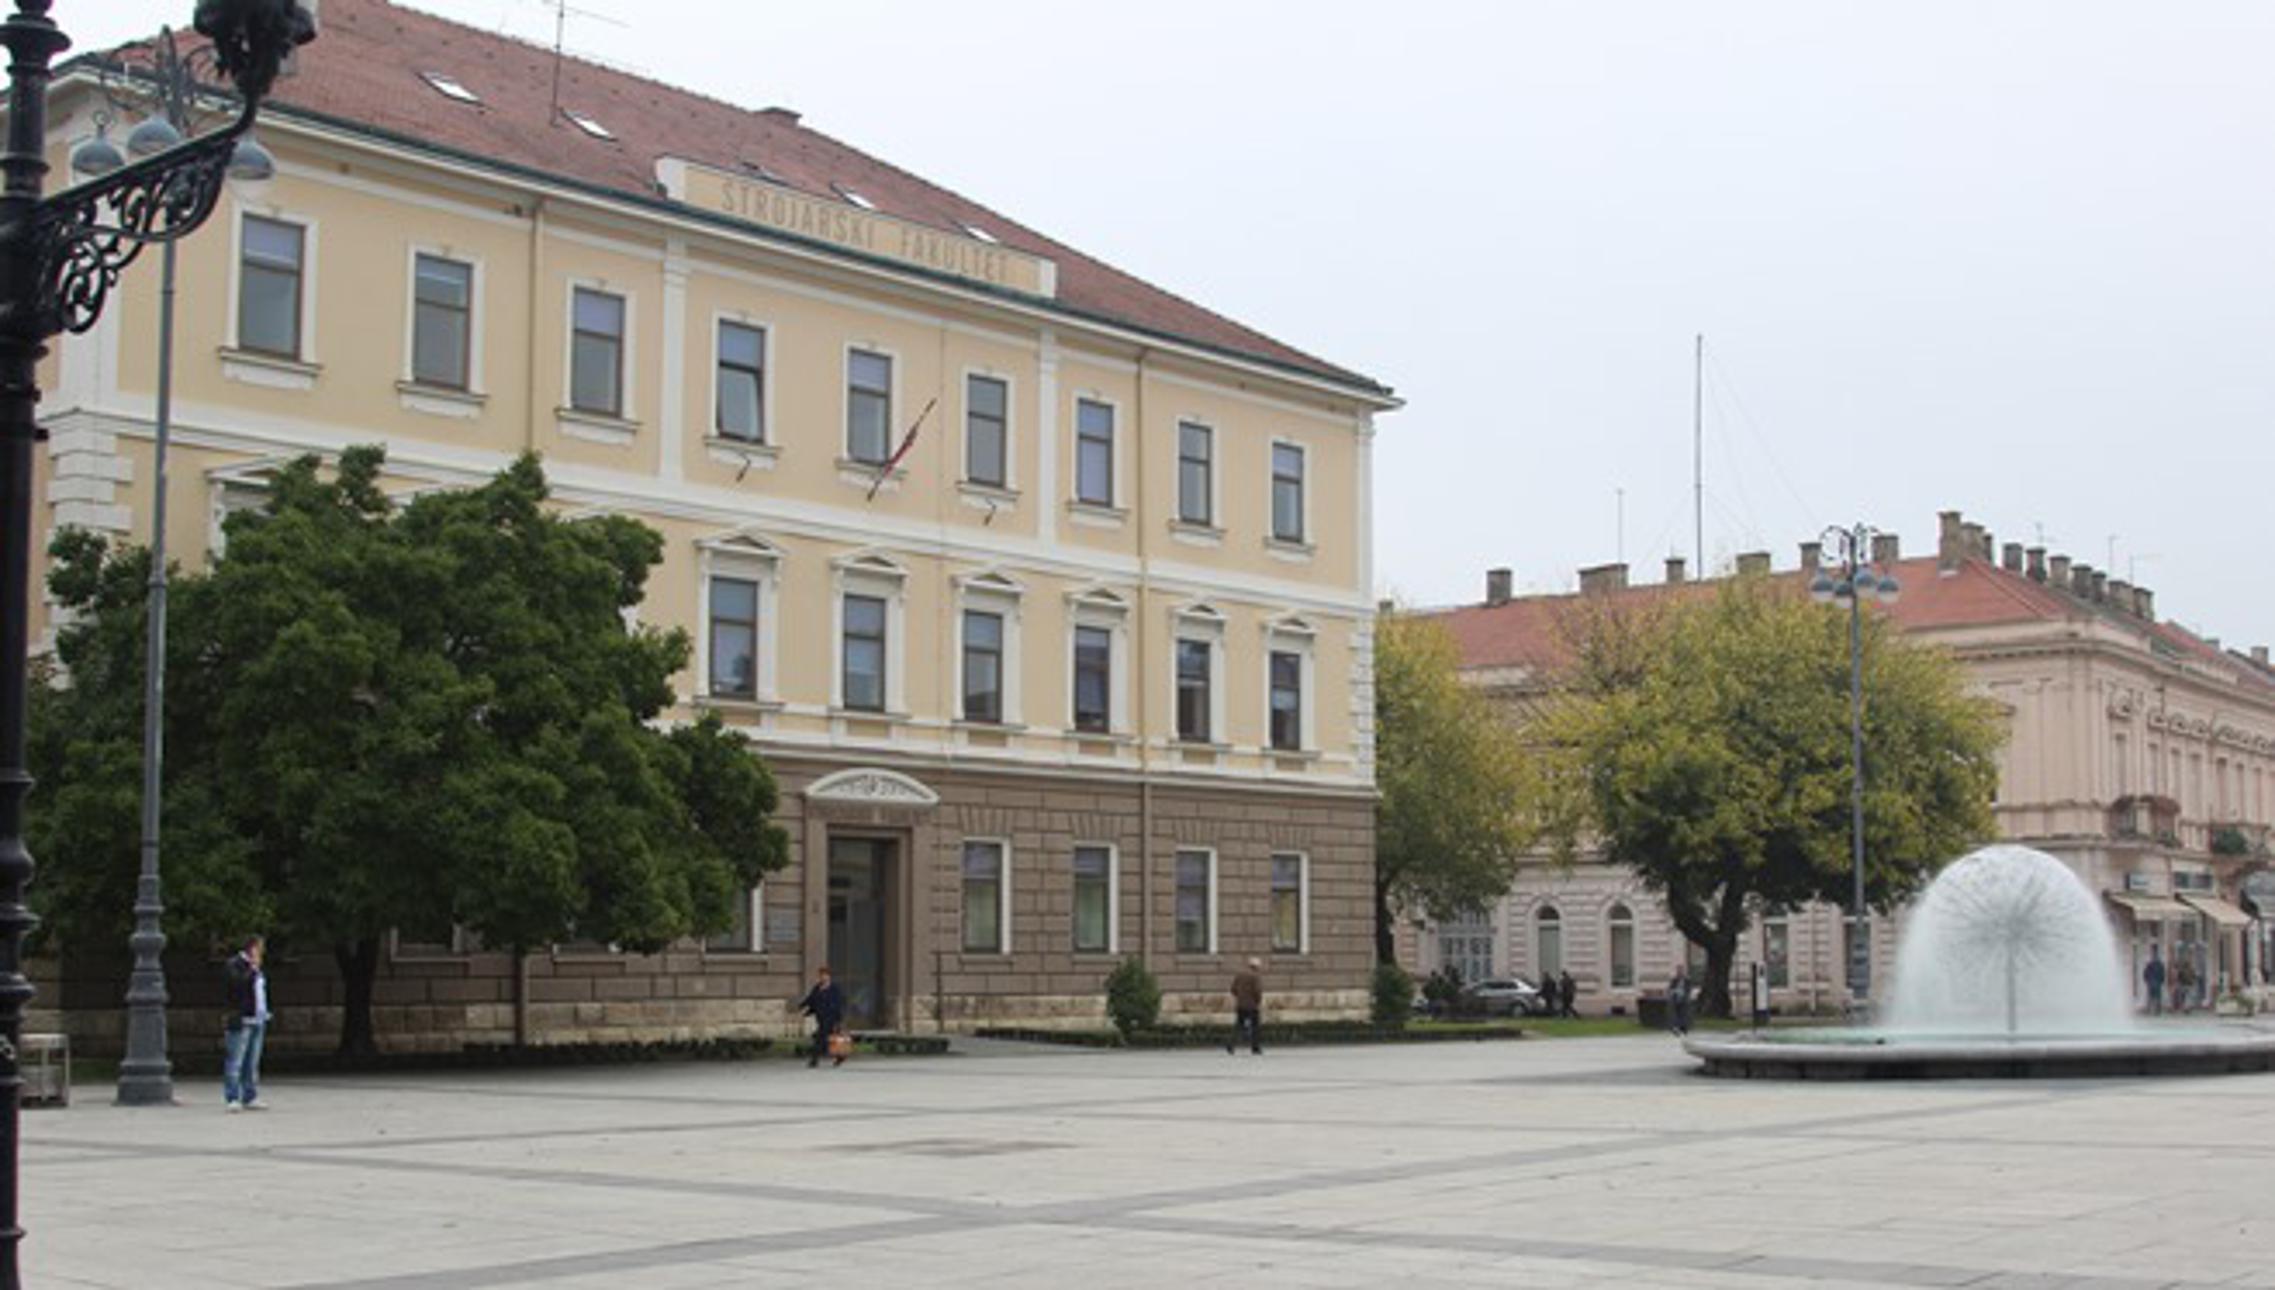 Zgrada Strojarskog fakulteta u Slavonskom Brodu